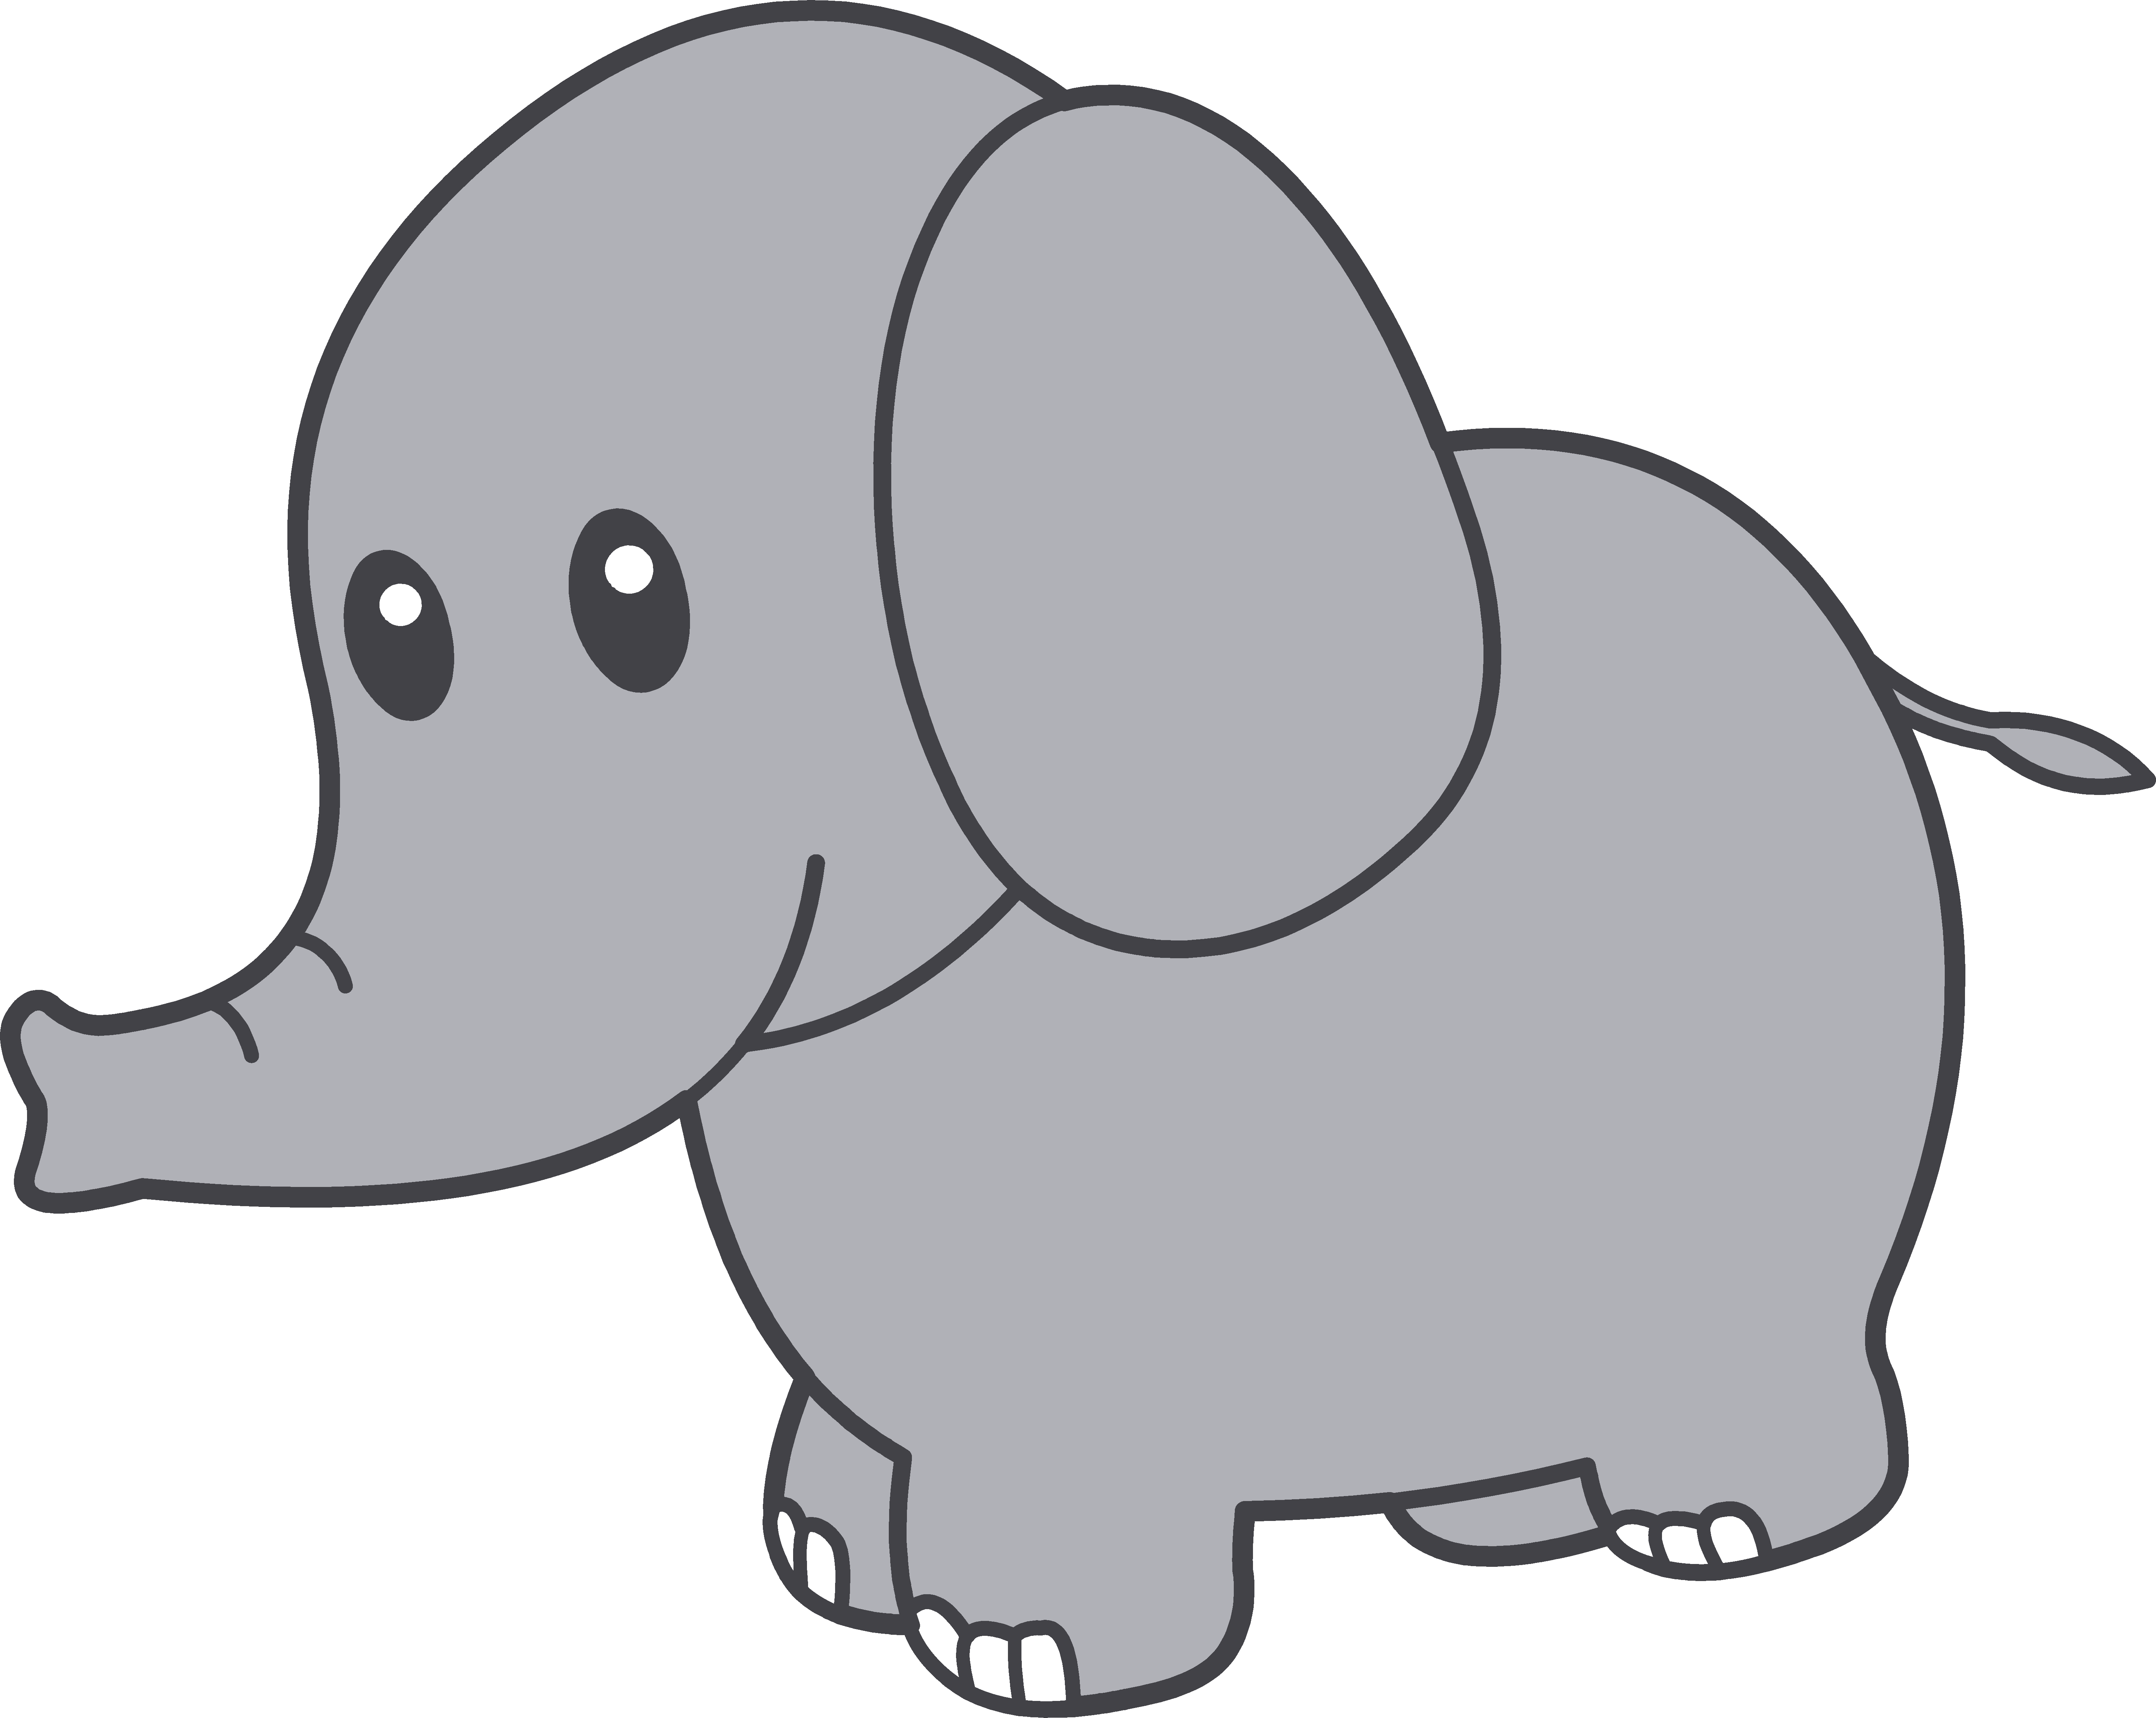 Elephant Clip Art Free - Tumundografico